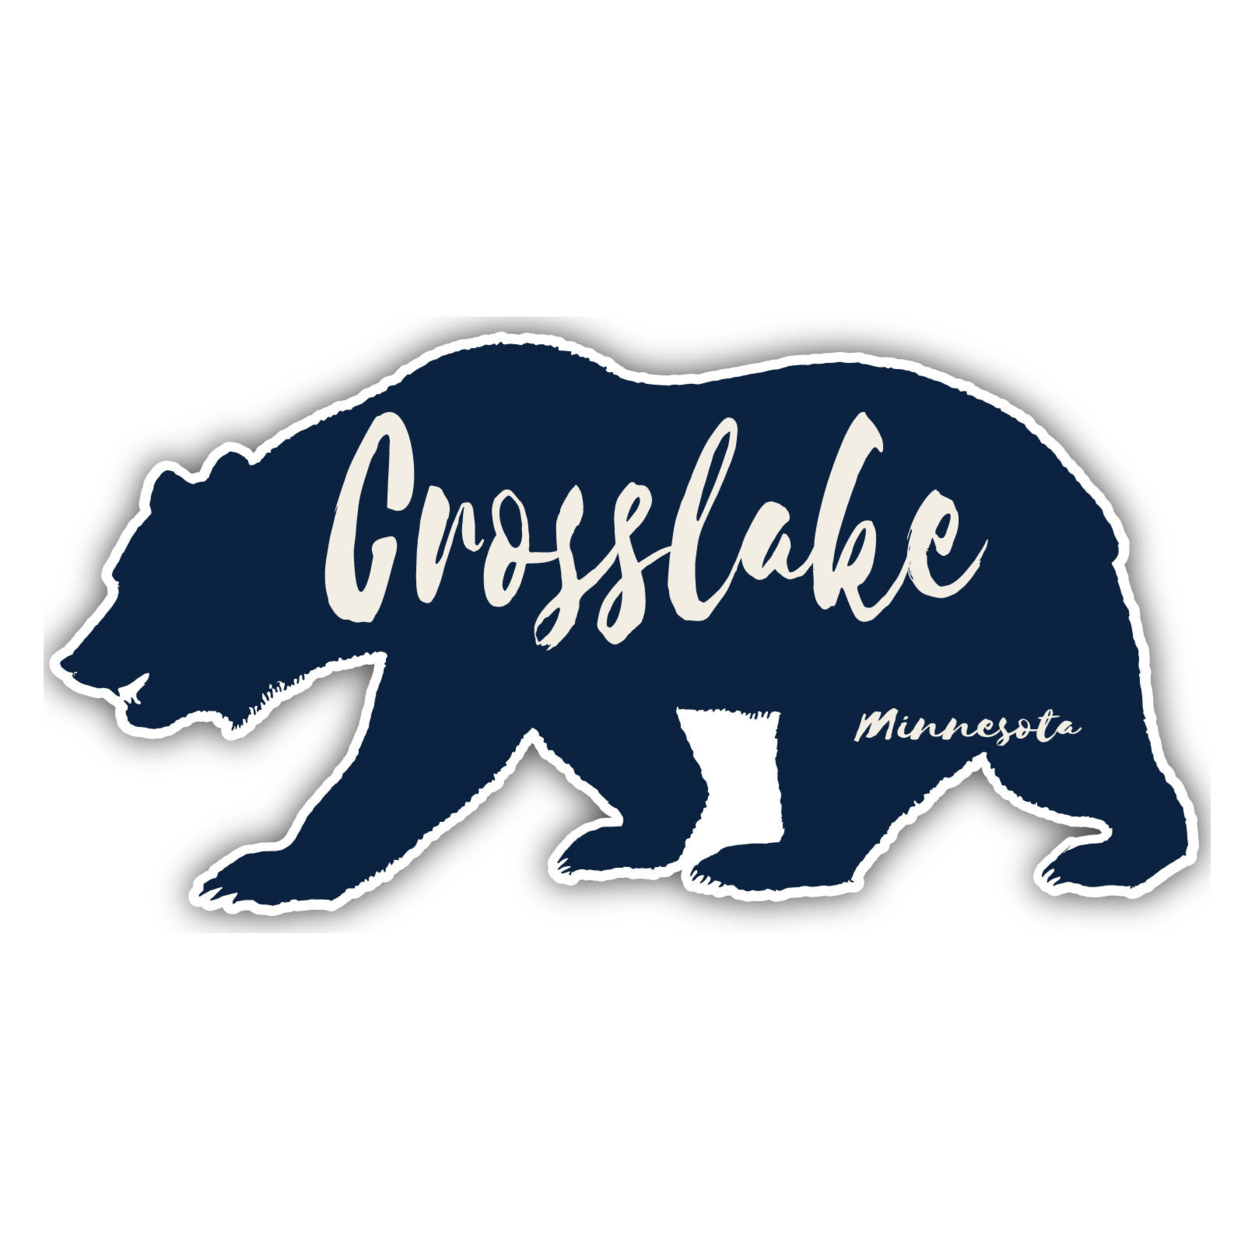 Crosslake Minnesota Souvenir Decorative Stickers (Choose Theme And Size) - 4-Pack, 6-Inch, Bear